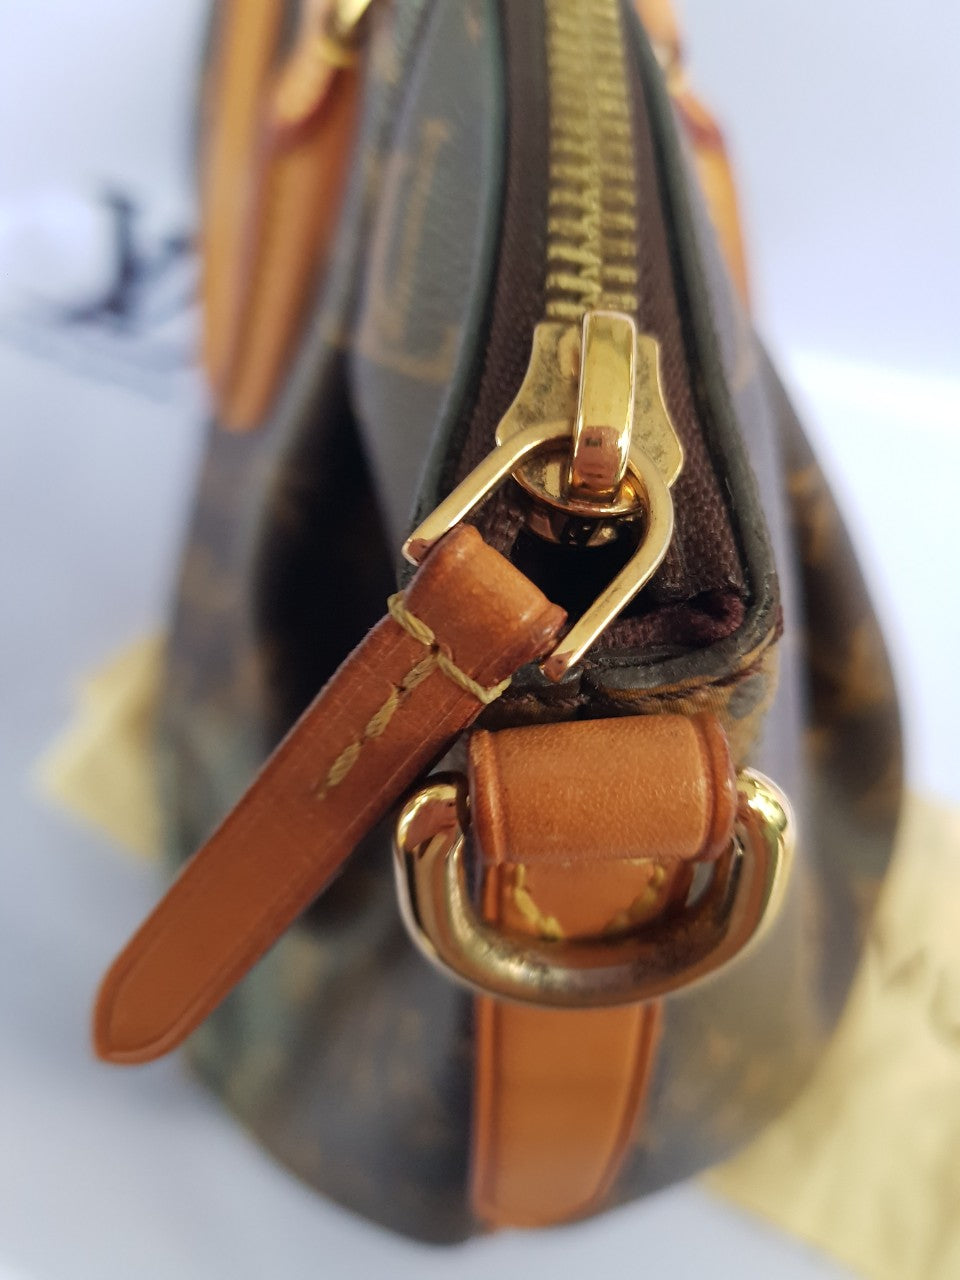 Louis Vuitton Speedy Doctor 25 Noir Handbag Auction